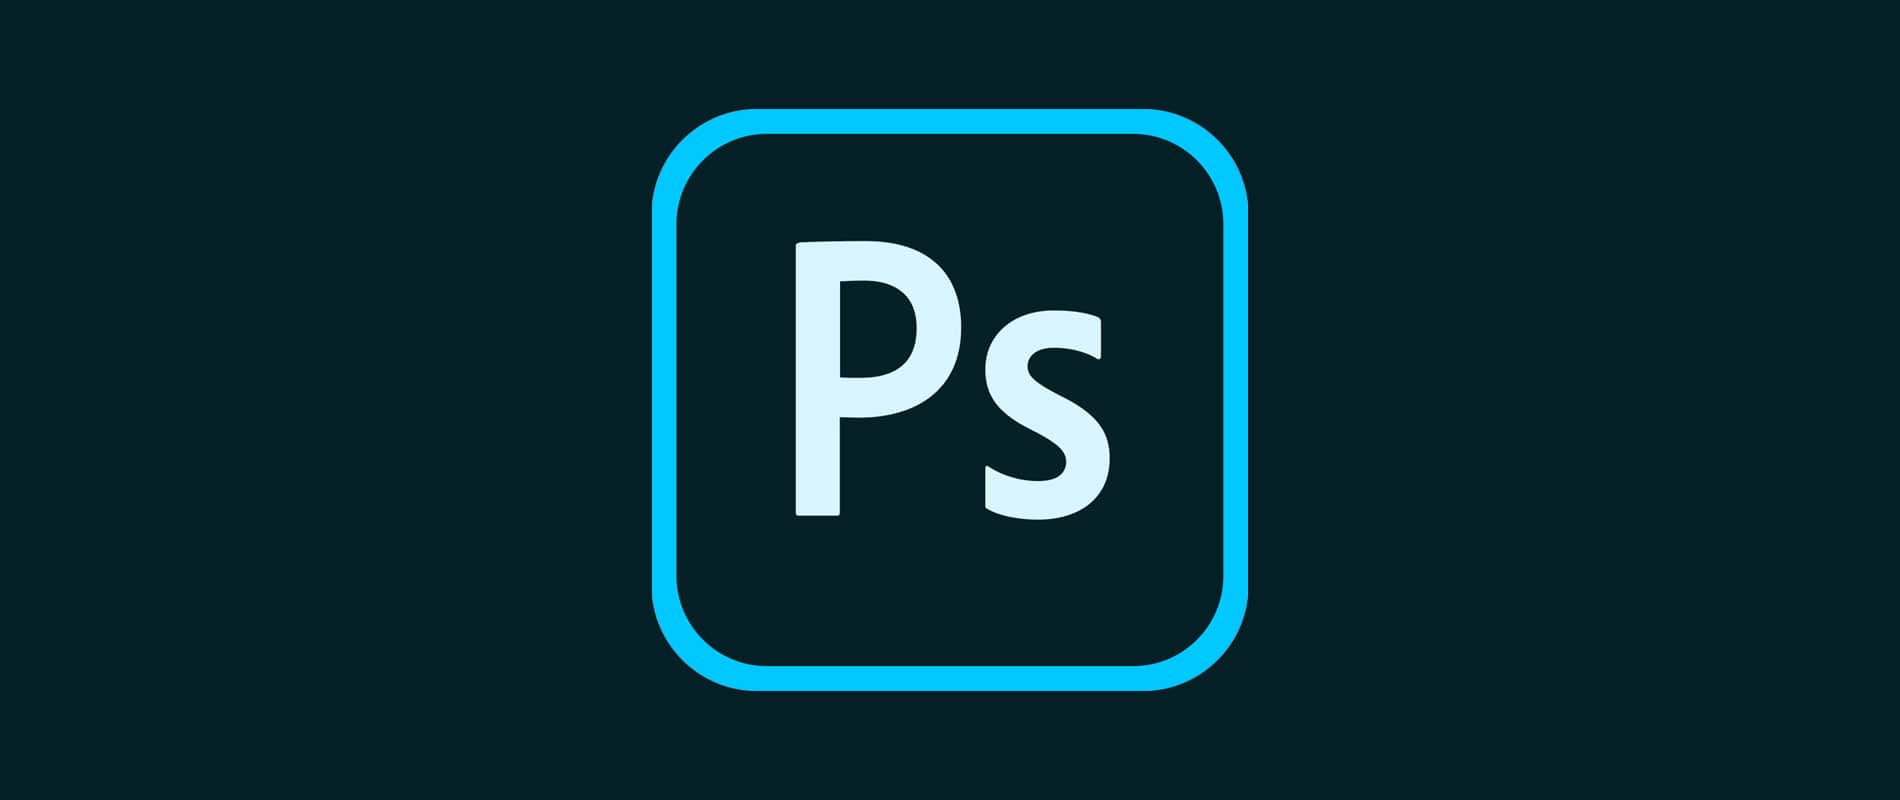 Adobe Photoshop CC 2019: Undo Shortcut & Transform Fixes - Blayney Partnership